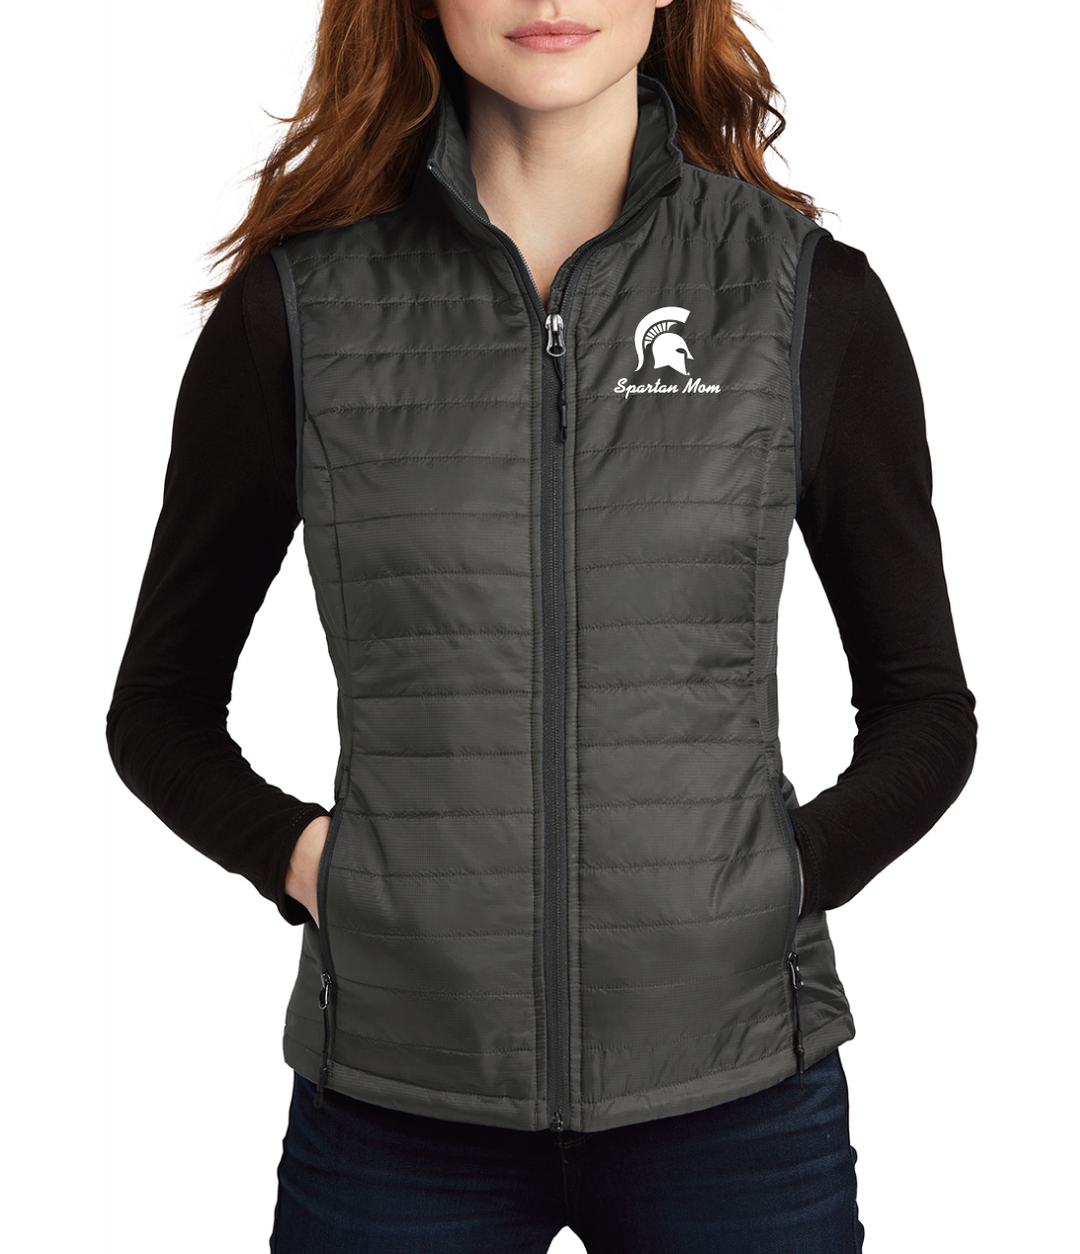 Michigan State University Spartan Mom Women's Puffer Vest